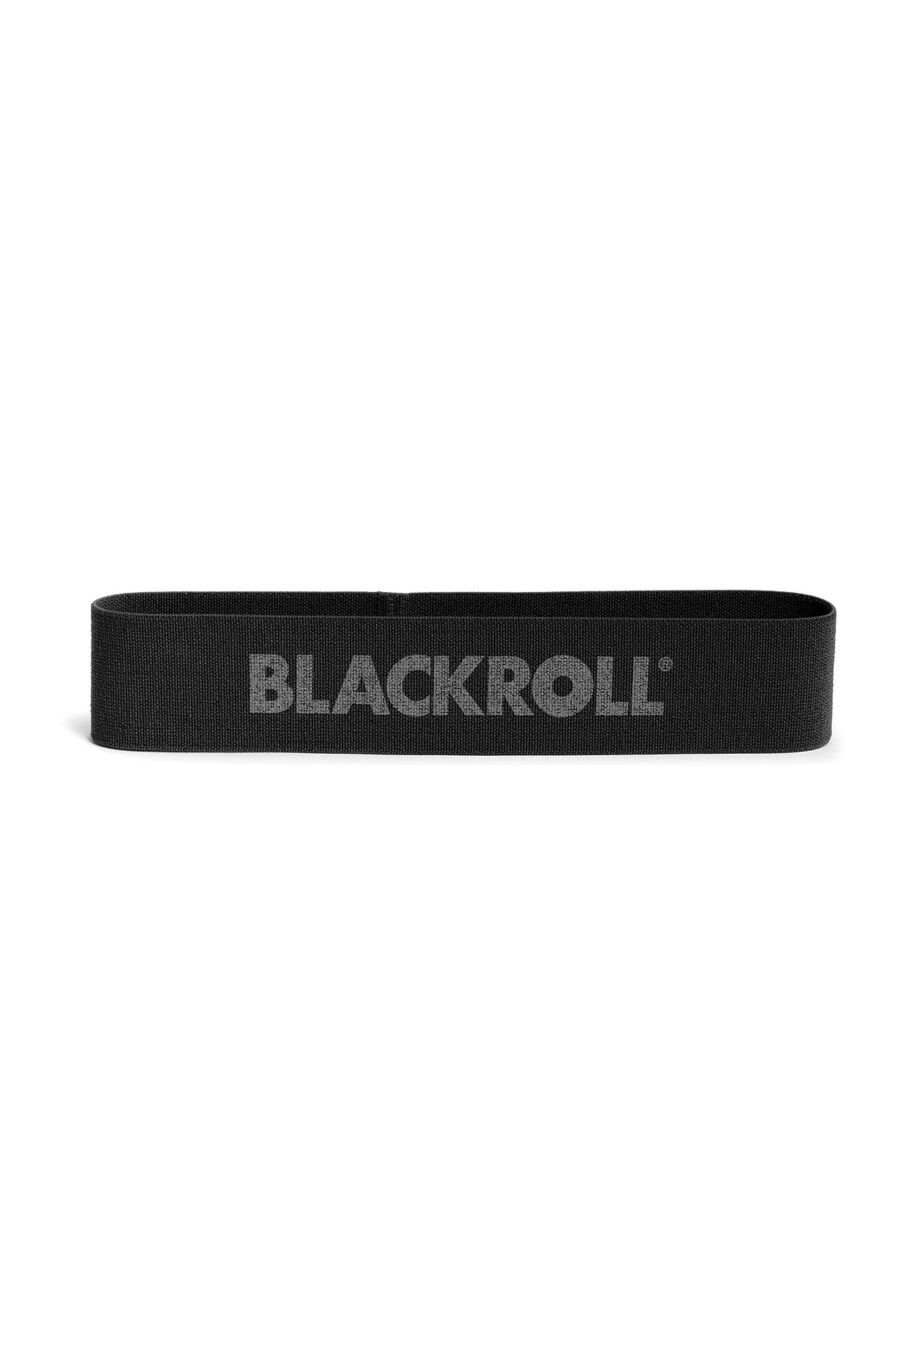 blackroll loop band black stand training fengbao shop 1080 wien